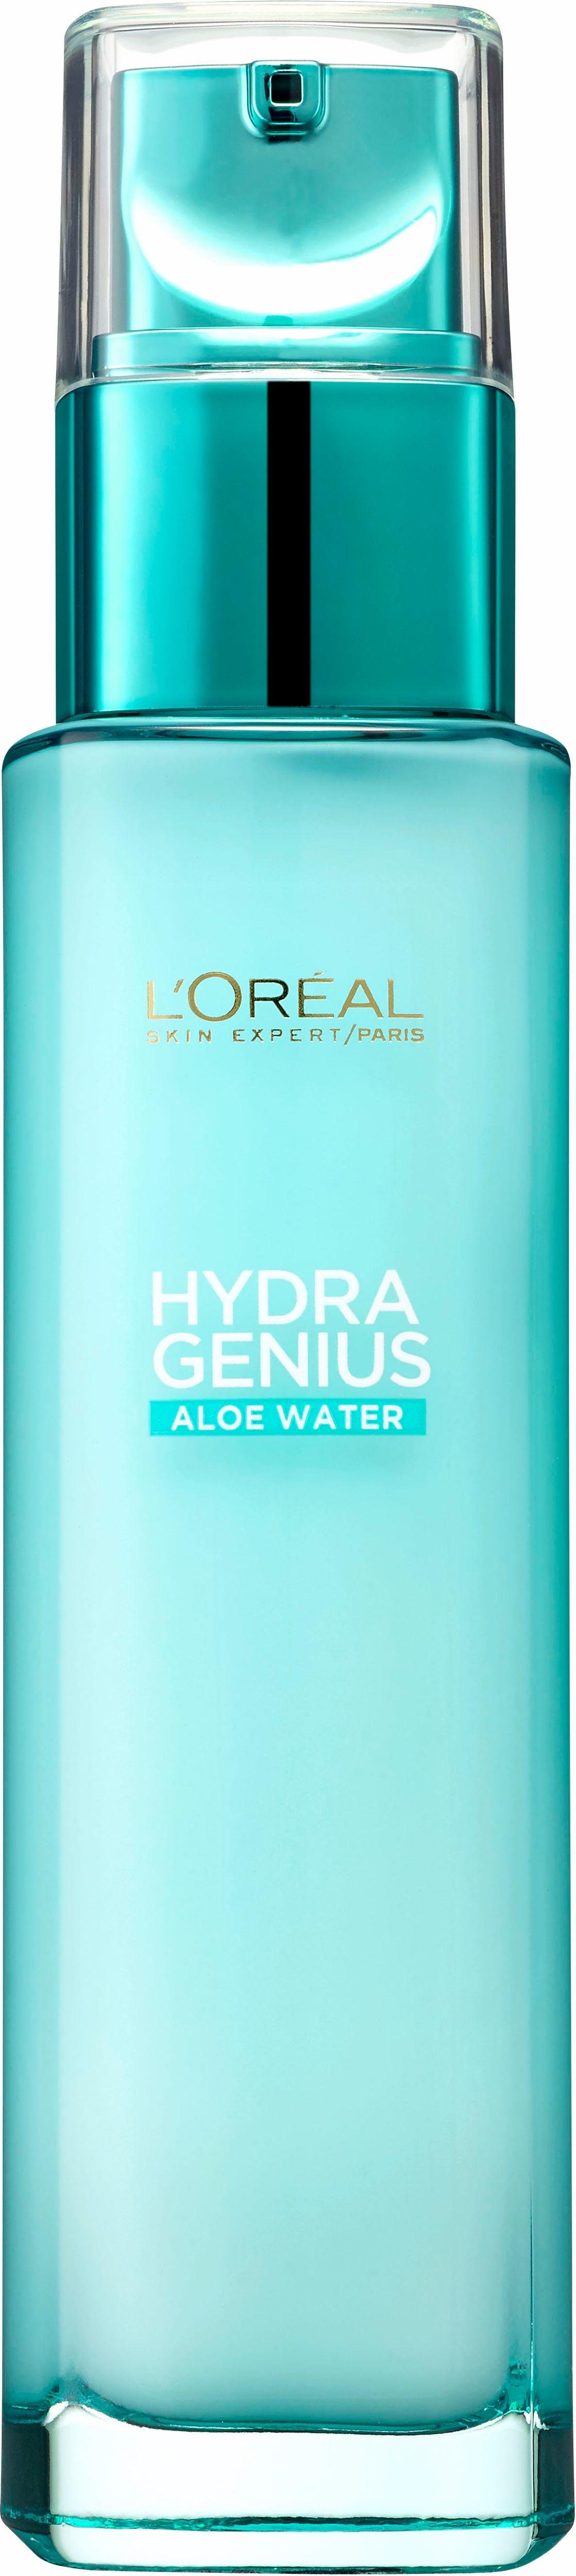 bis Hydra trockene Genius L'ORÉAL normale Haut für PARIS Aqua, Gesichtsfluid Aloe